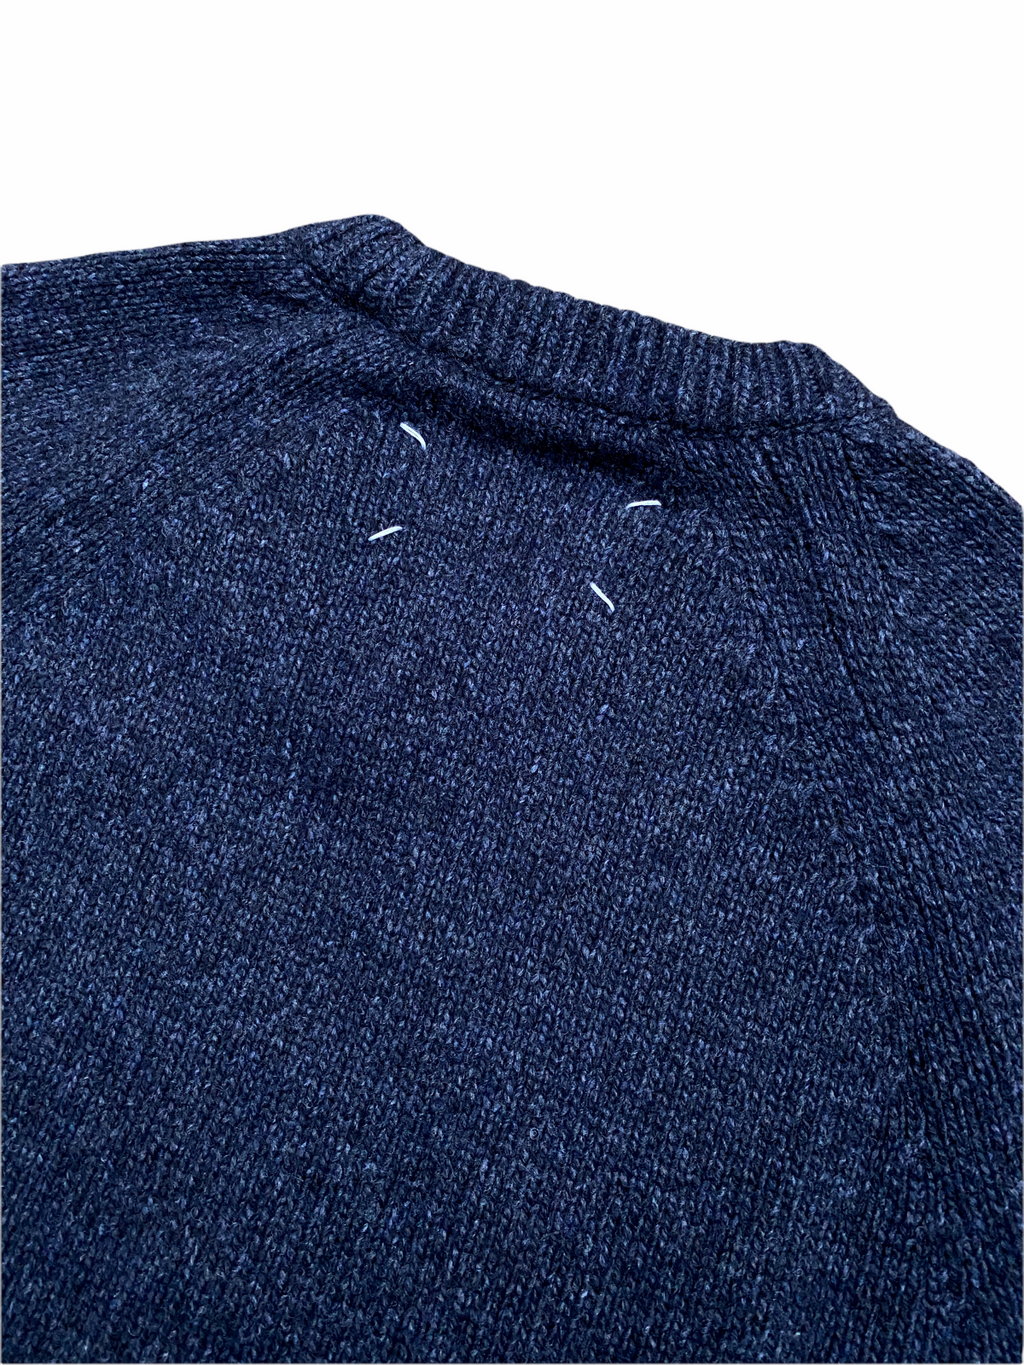 Navy Wool Sweater Size M